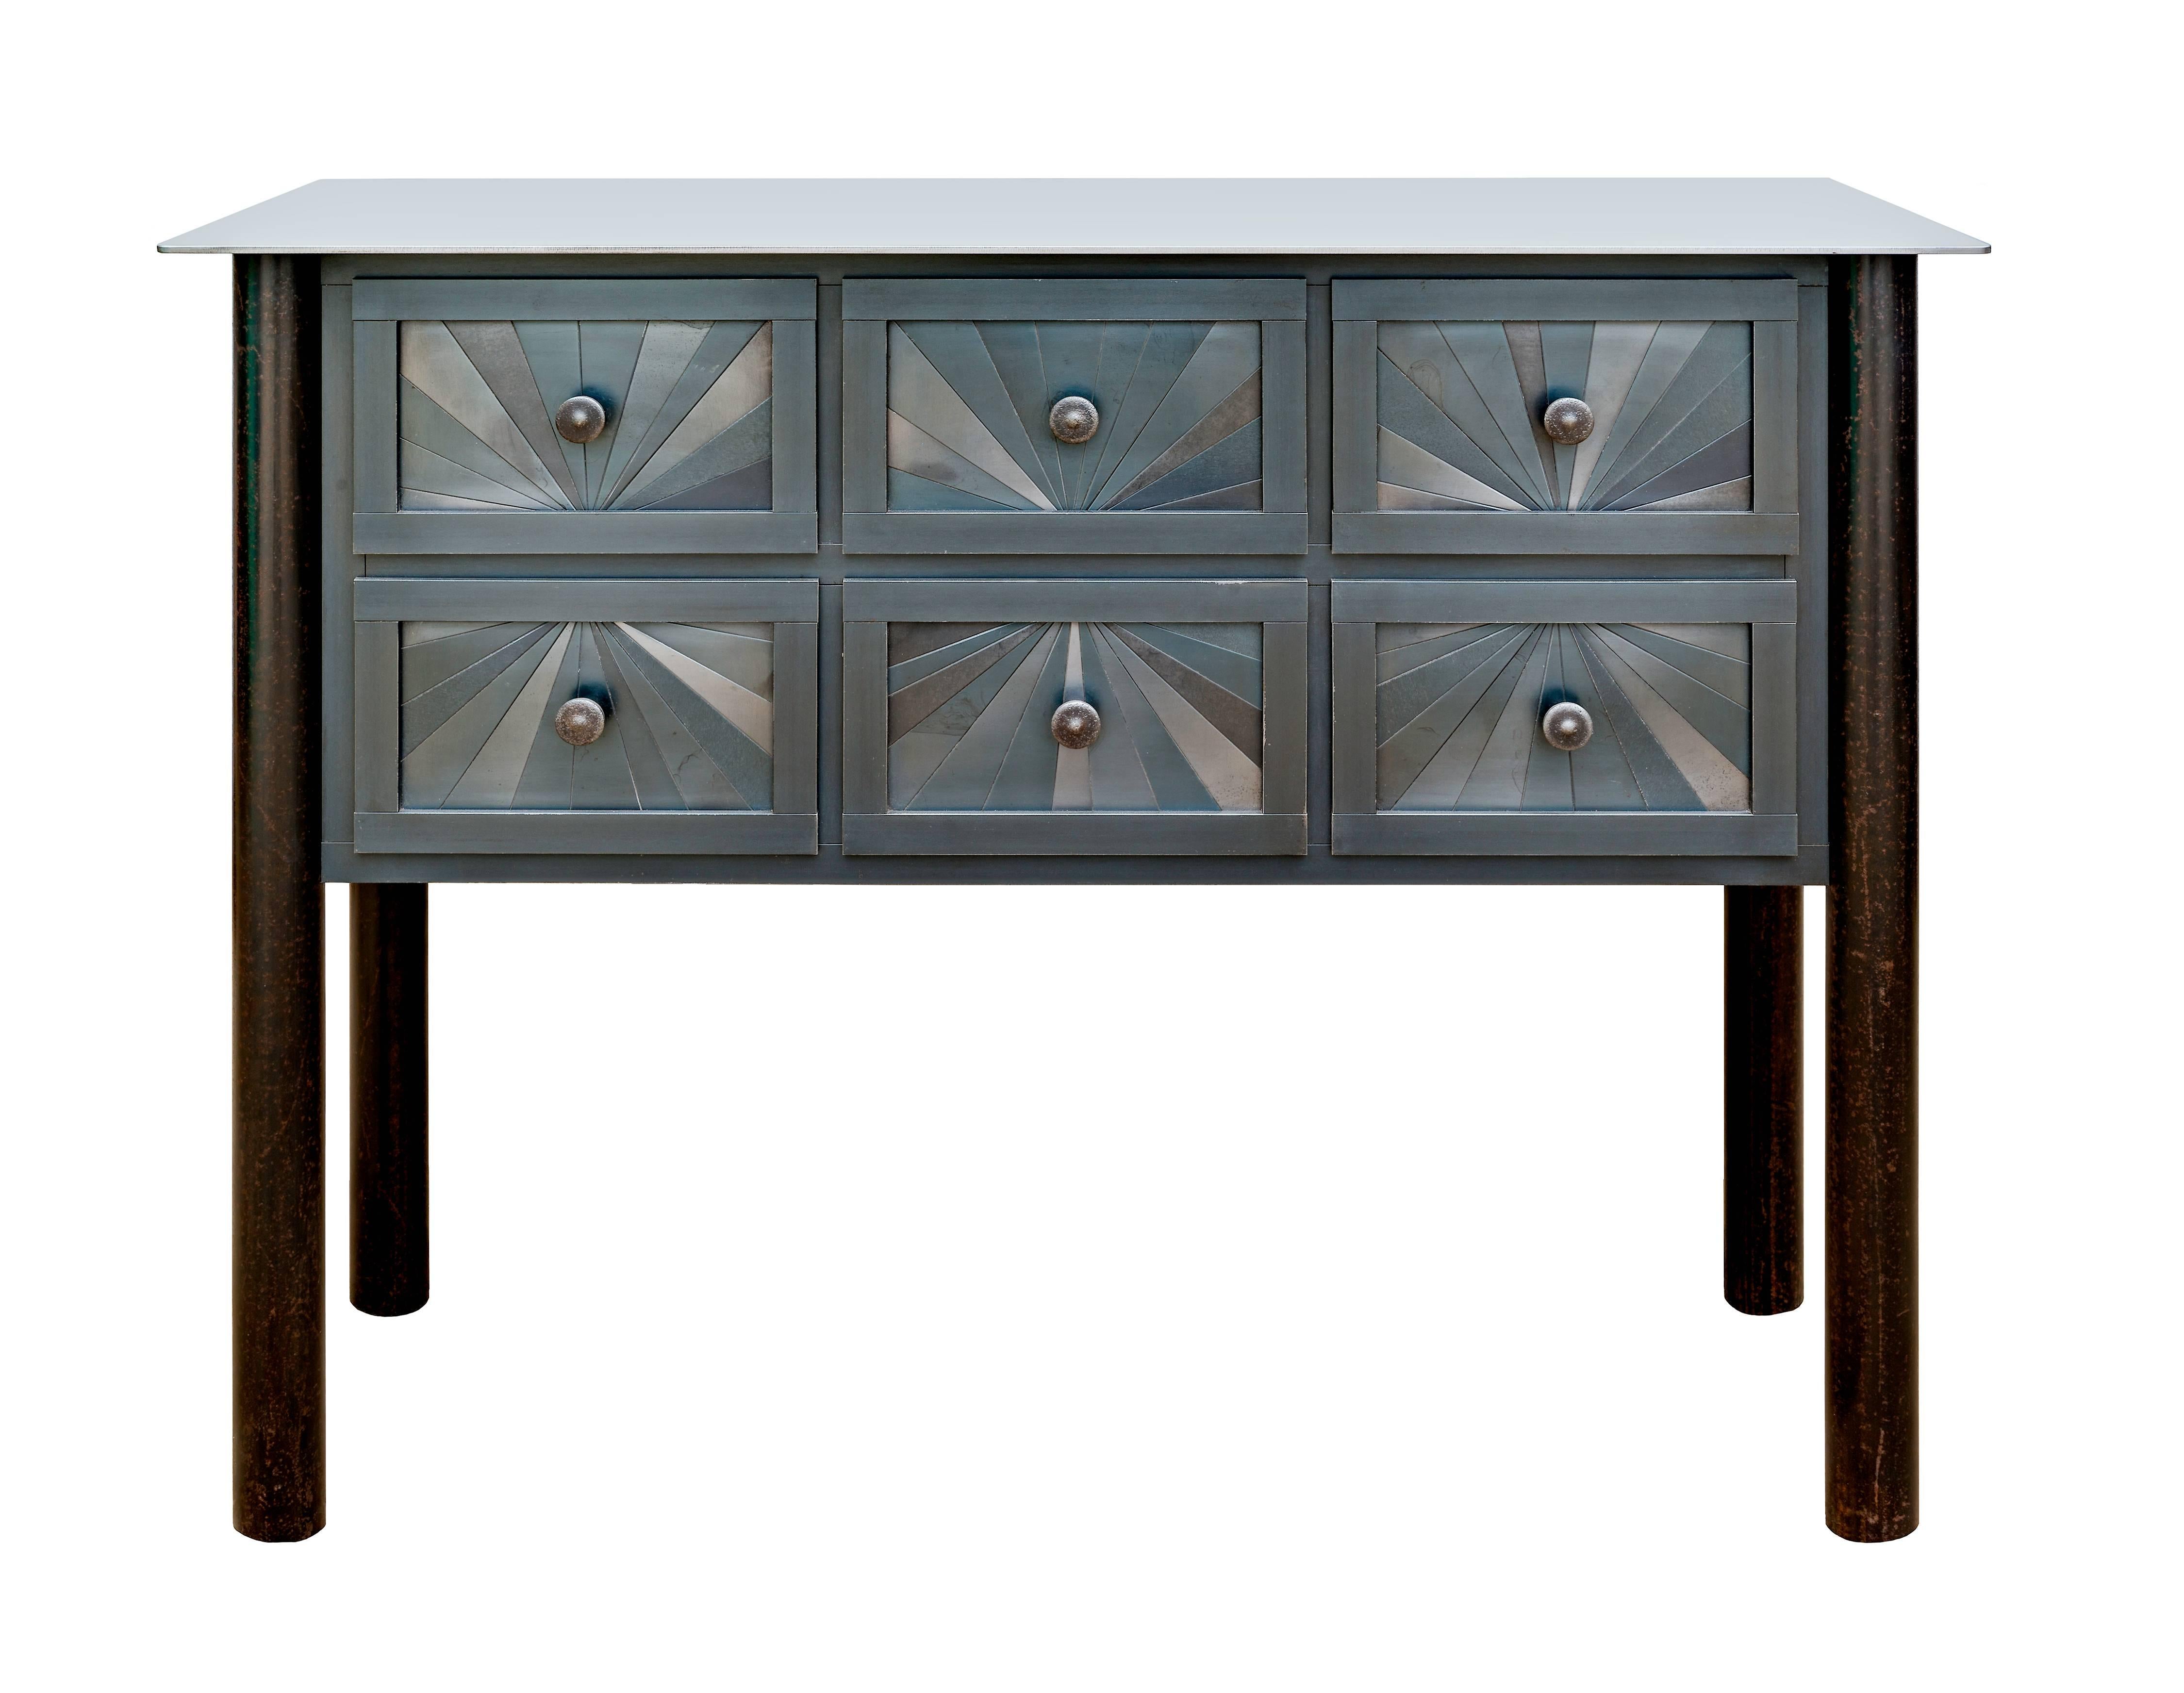 Six Drawer Starburst Counter - Steel Furniture, Gee's Bend Quilt Design - Art by Jim Rose